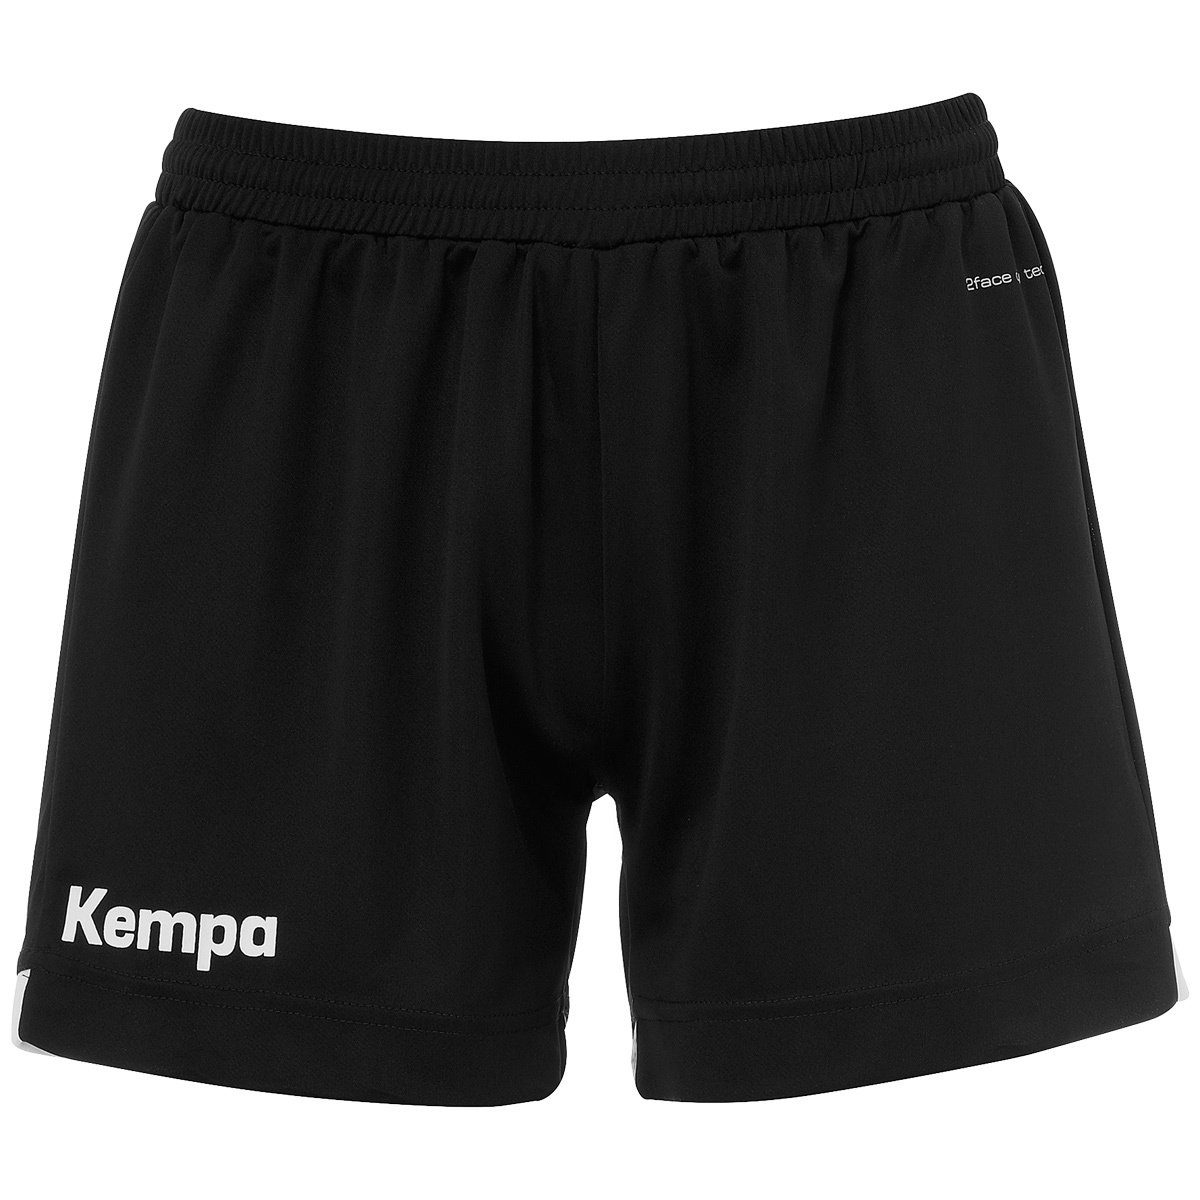 Kempa Shorts Kempa Shorts PLAYER WOMEN schwarz/weiß | Shorts